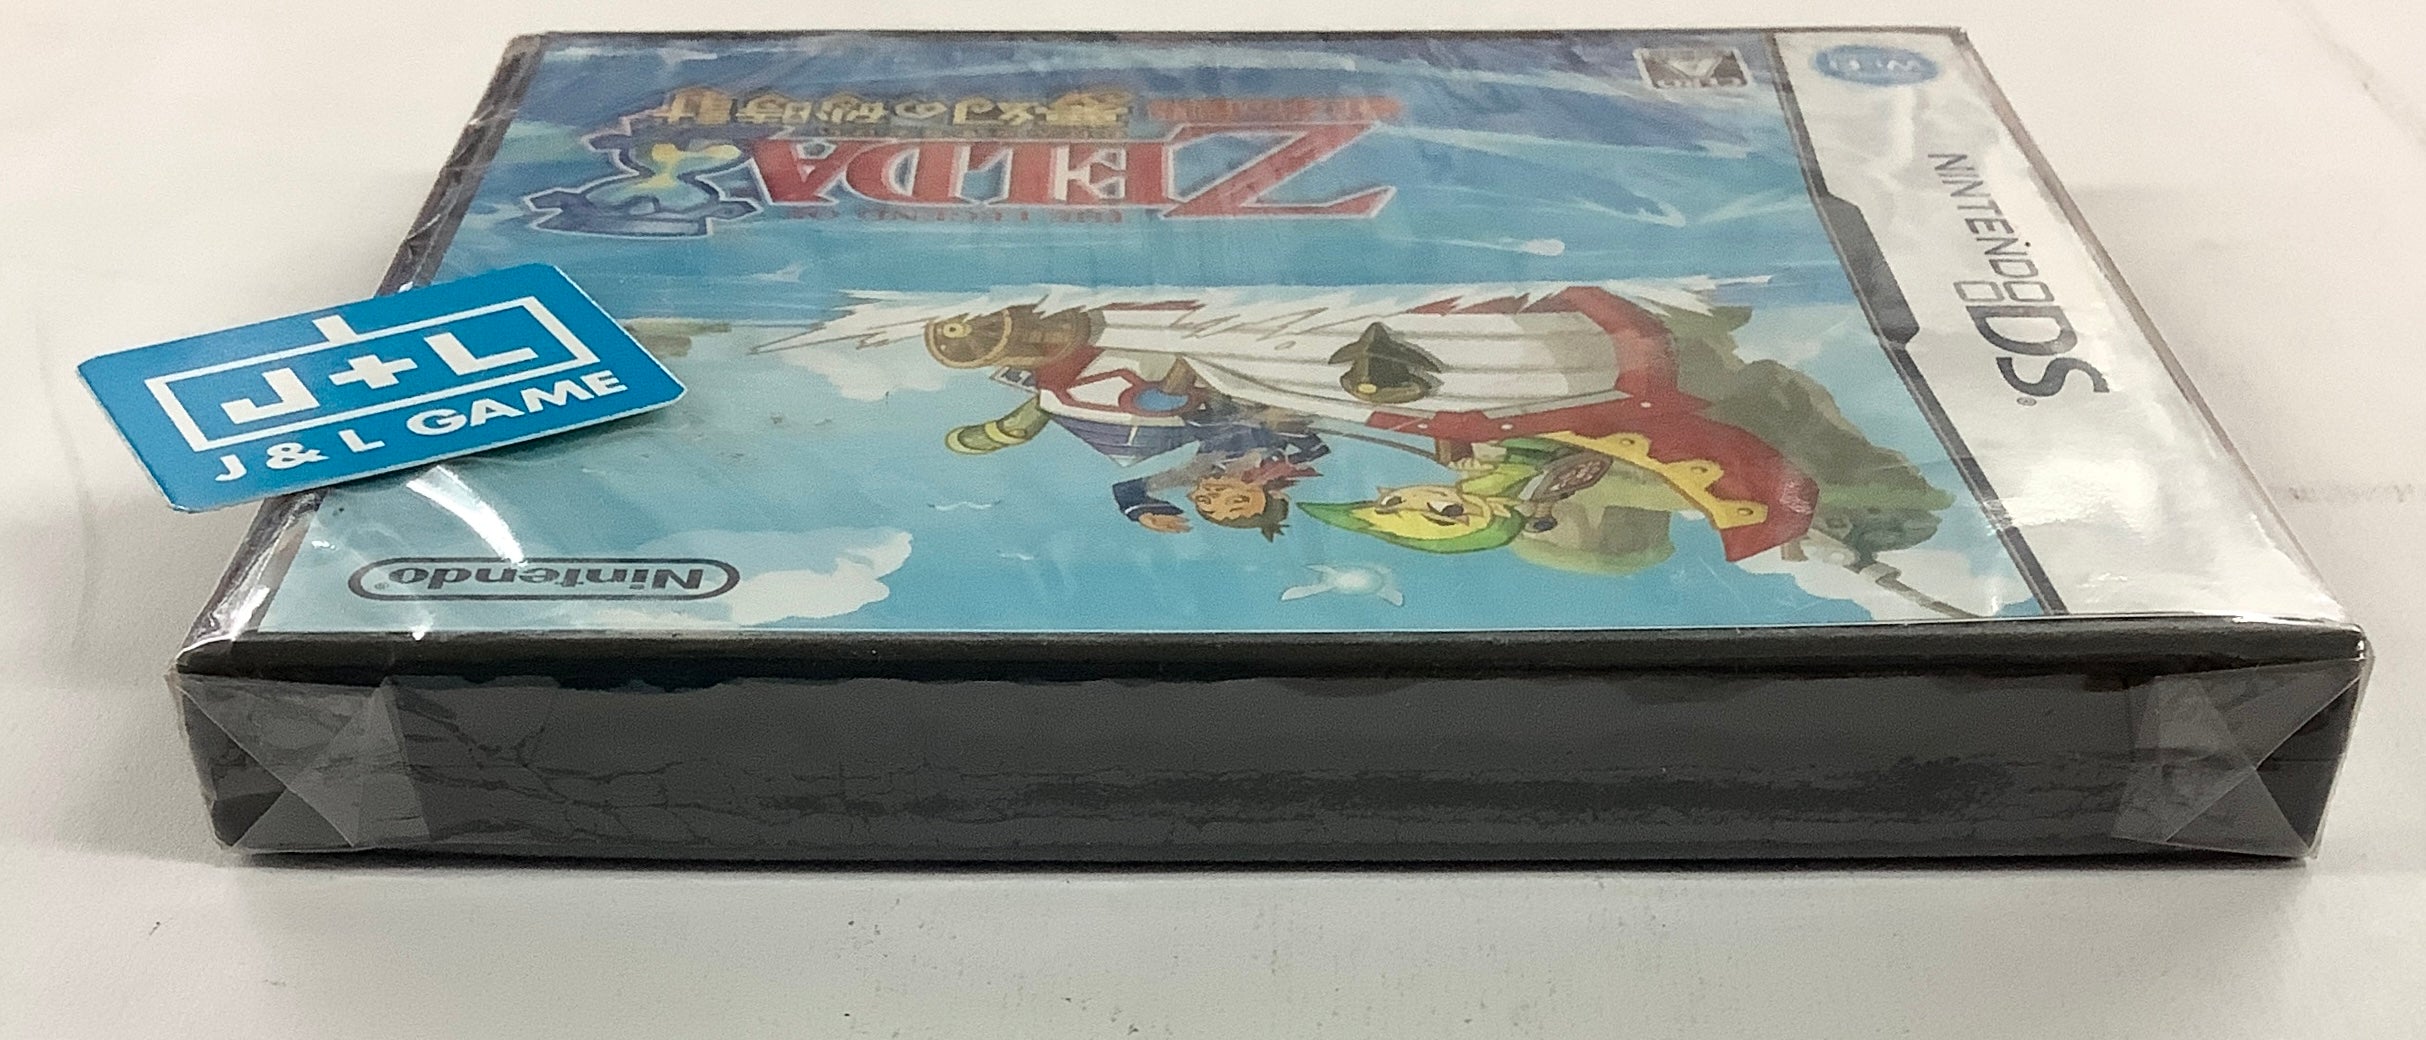 Zelda no Densetsu: Mugen no Sunadokei - (NDS) Nintendo DS (Japanese Import) Video Games Nintendo   